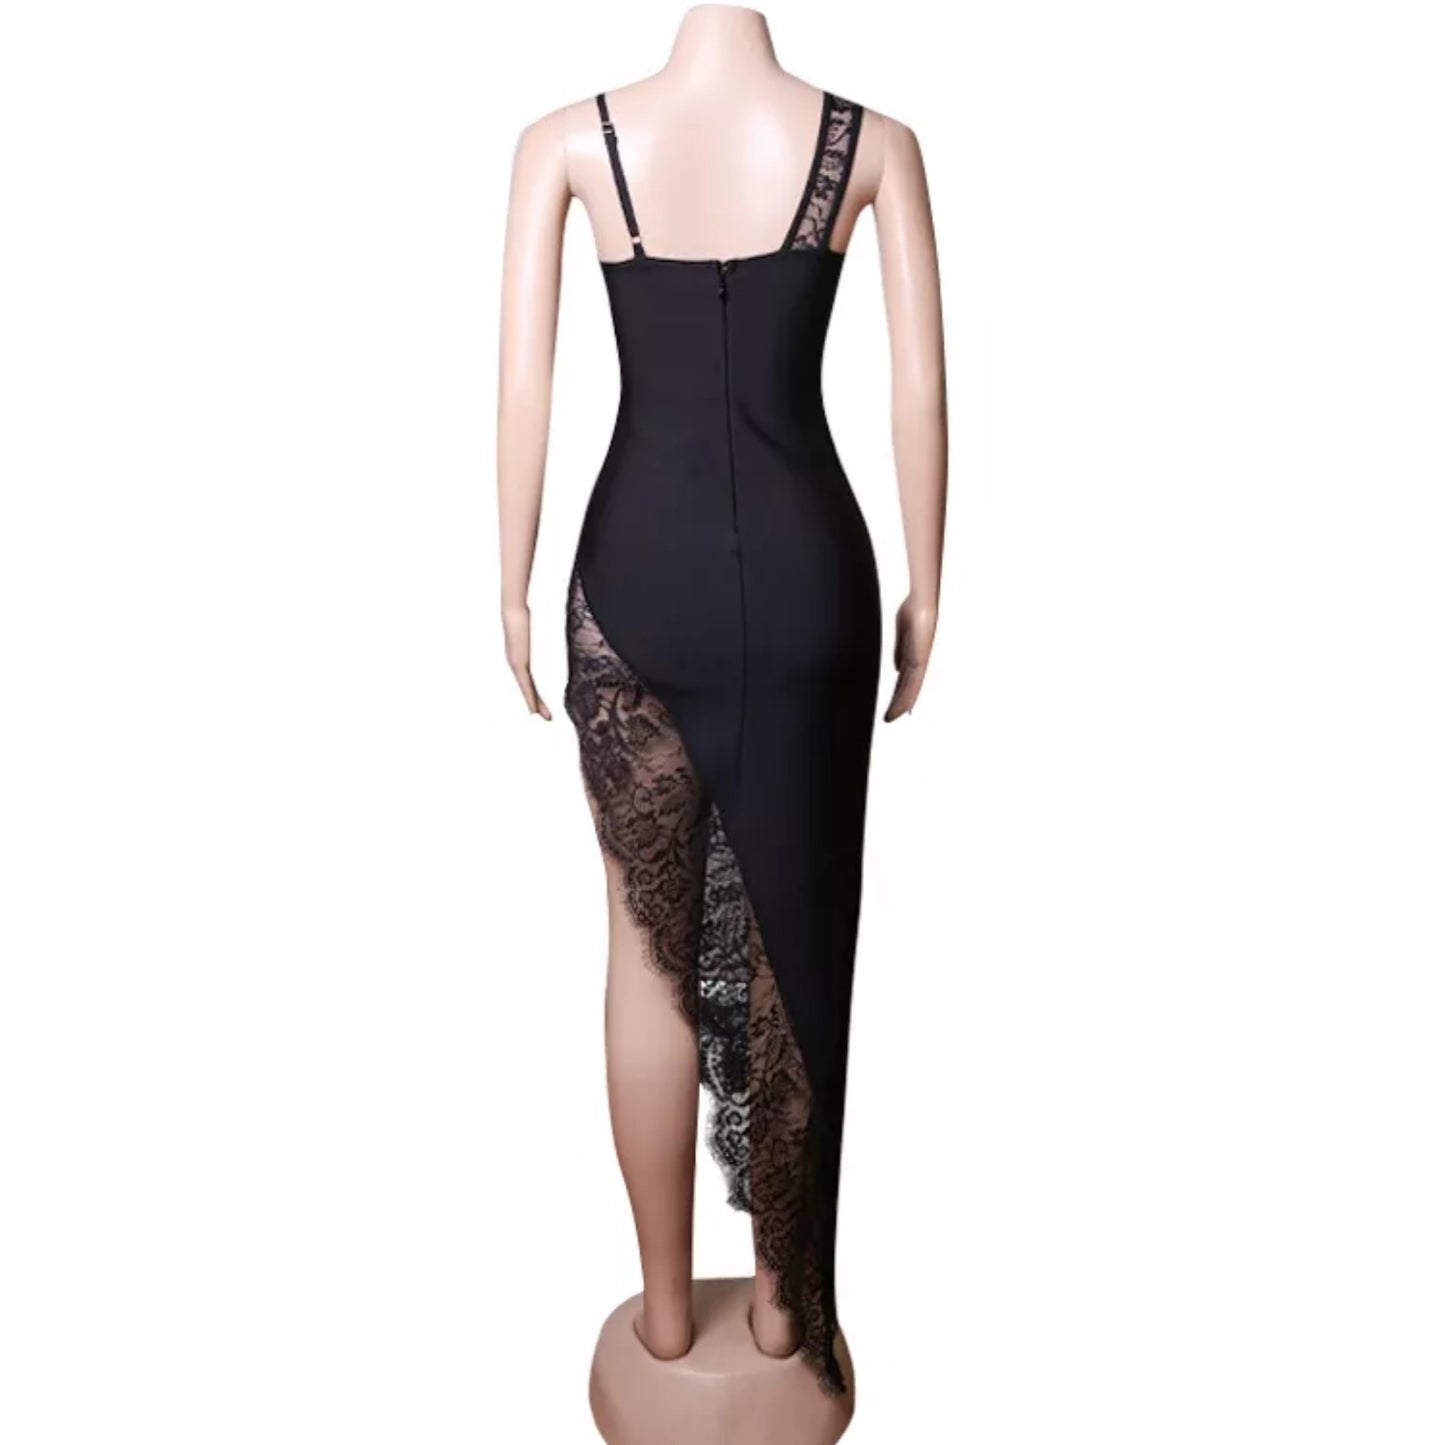 High Slit Lace Dress Zhuofei Clothes Co., Ltd.